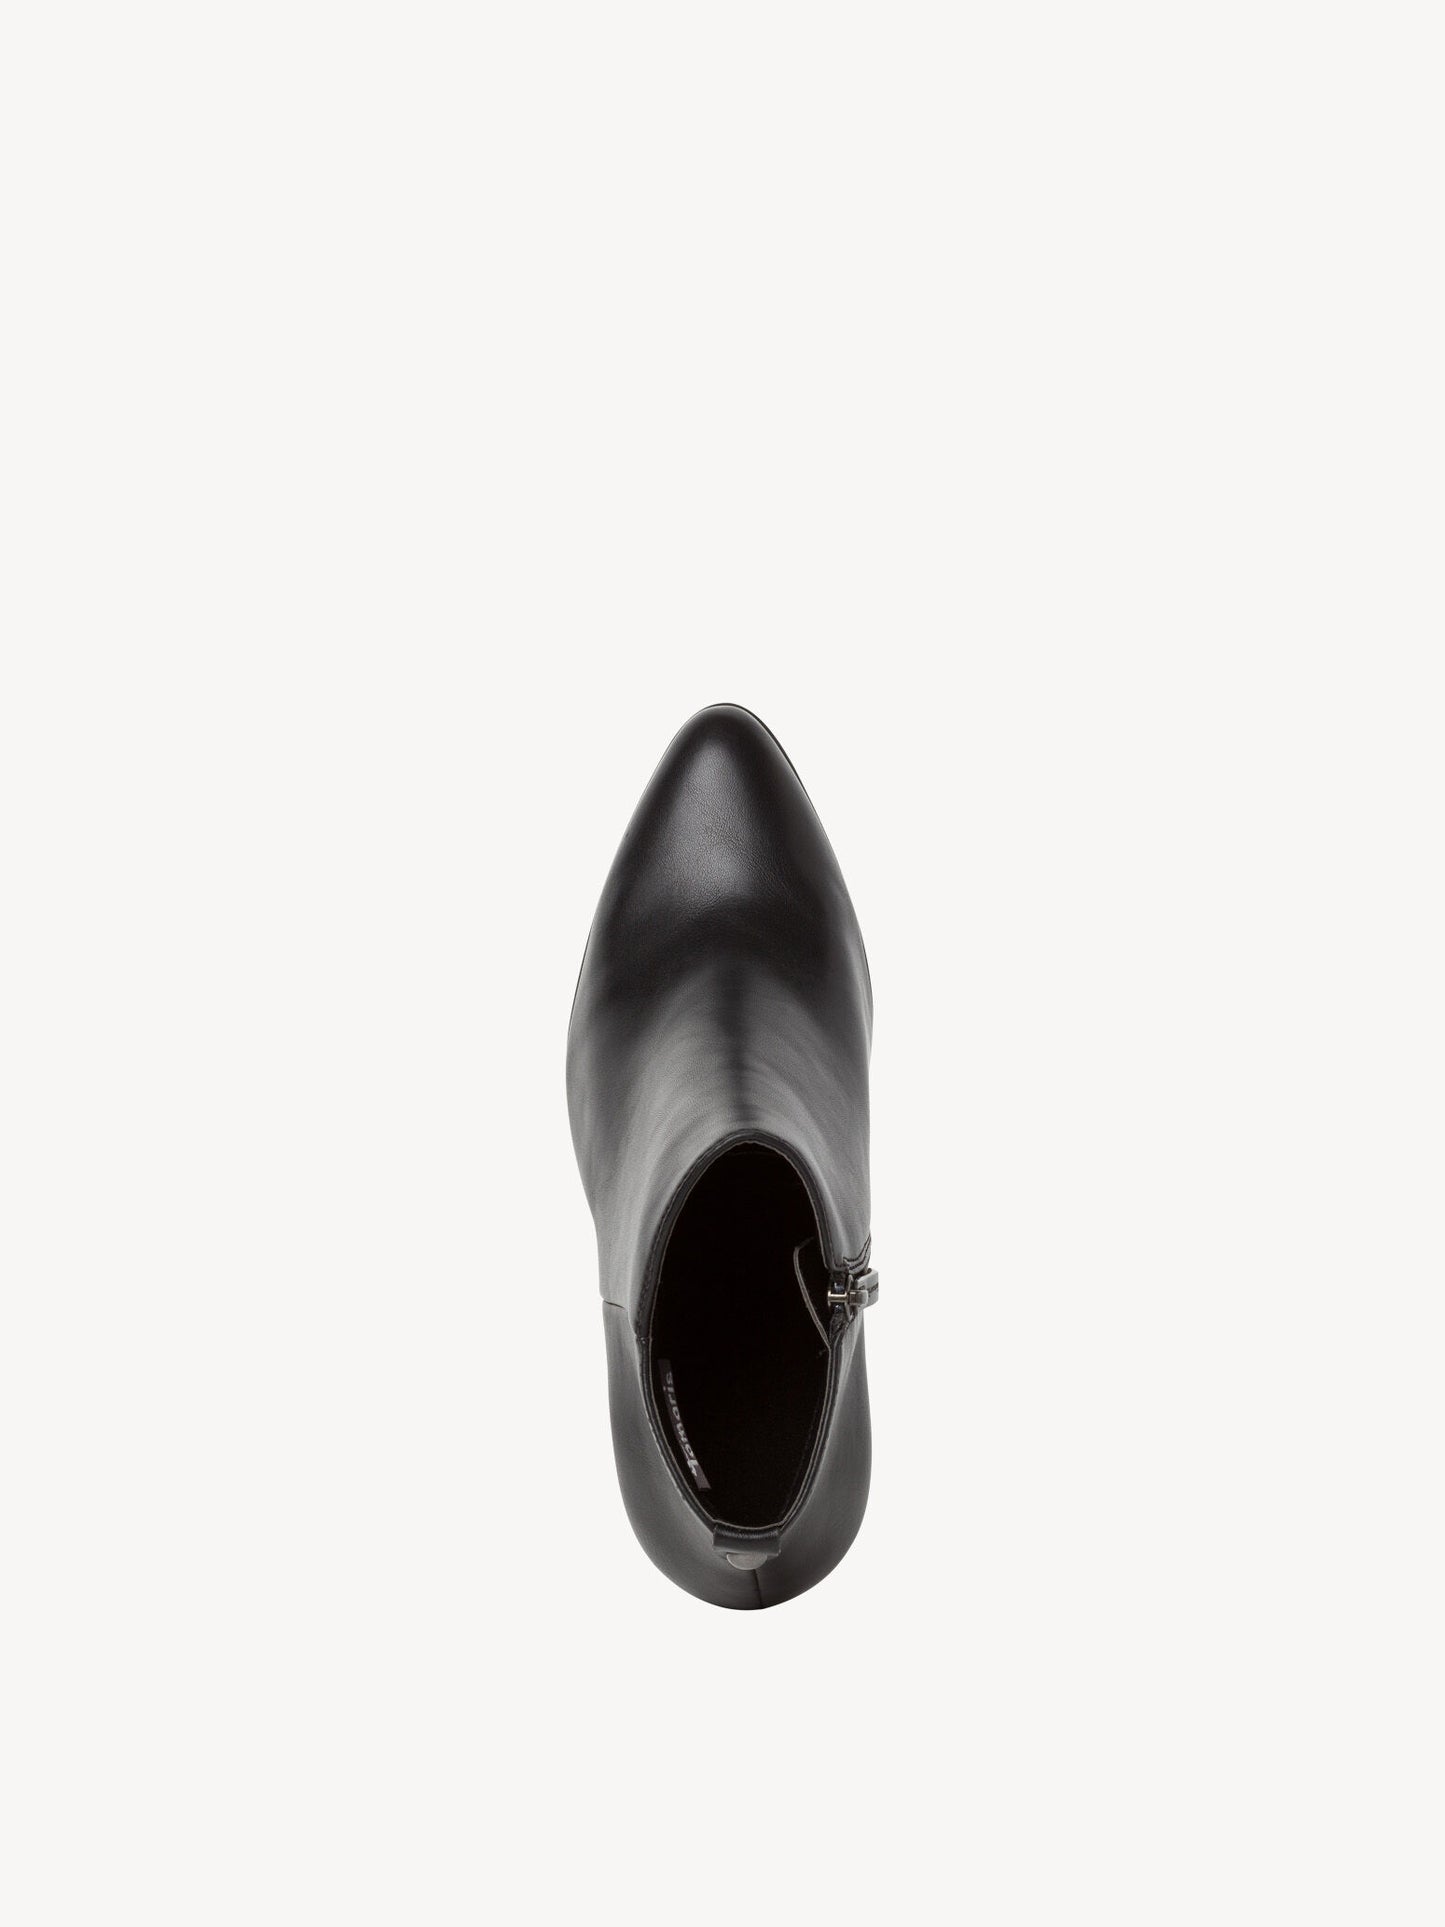 Vegan Leather Heeled Ankle Boots - Black